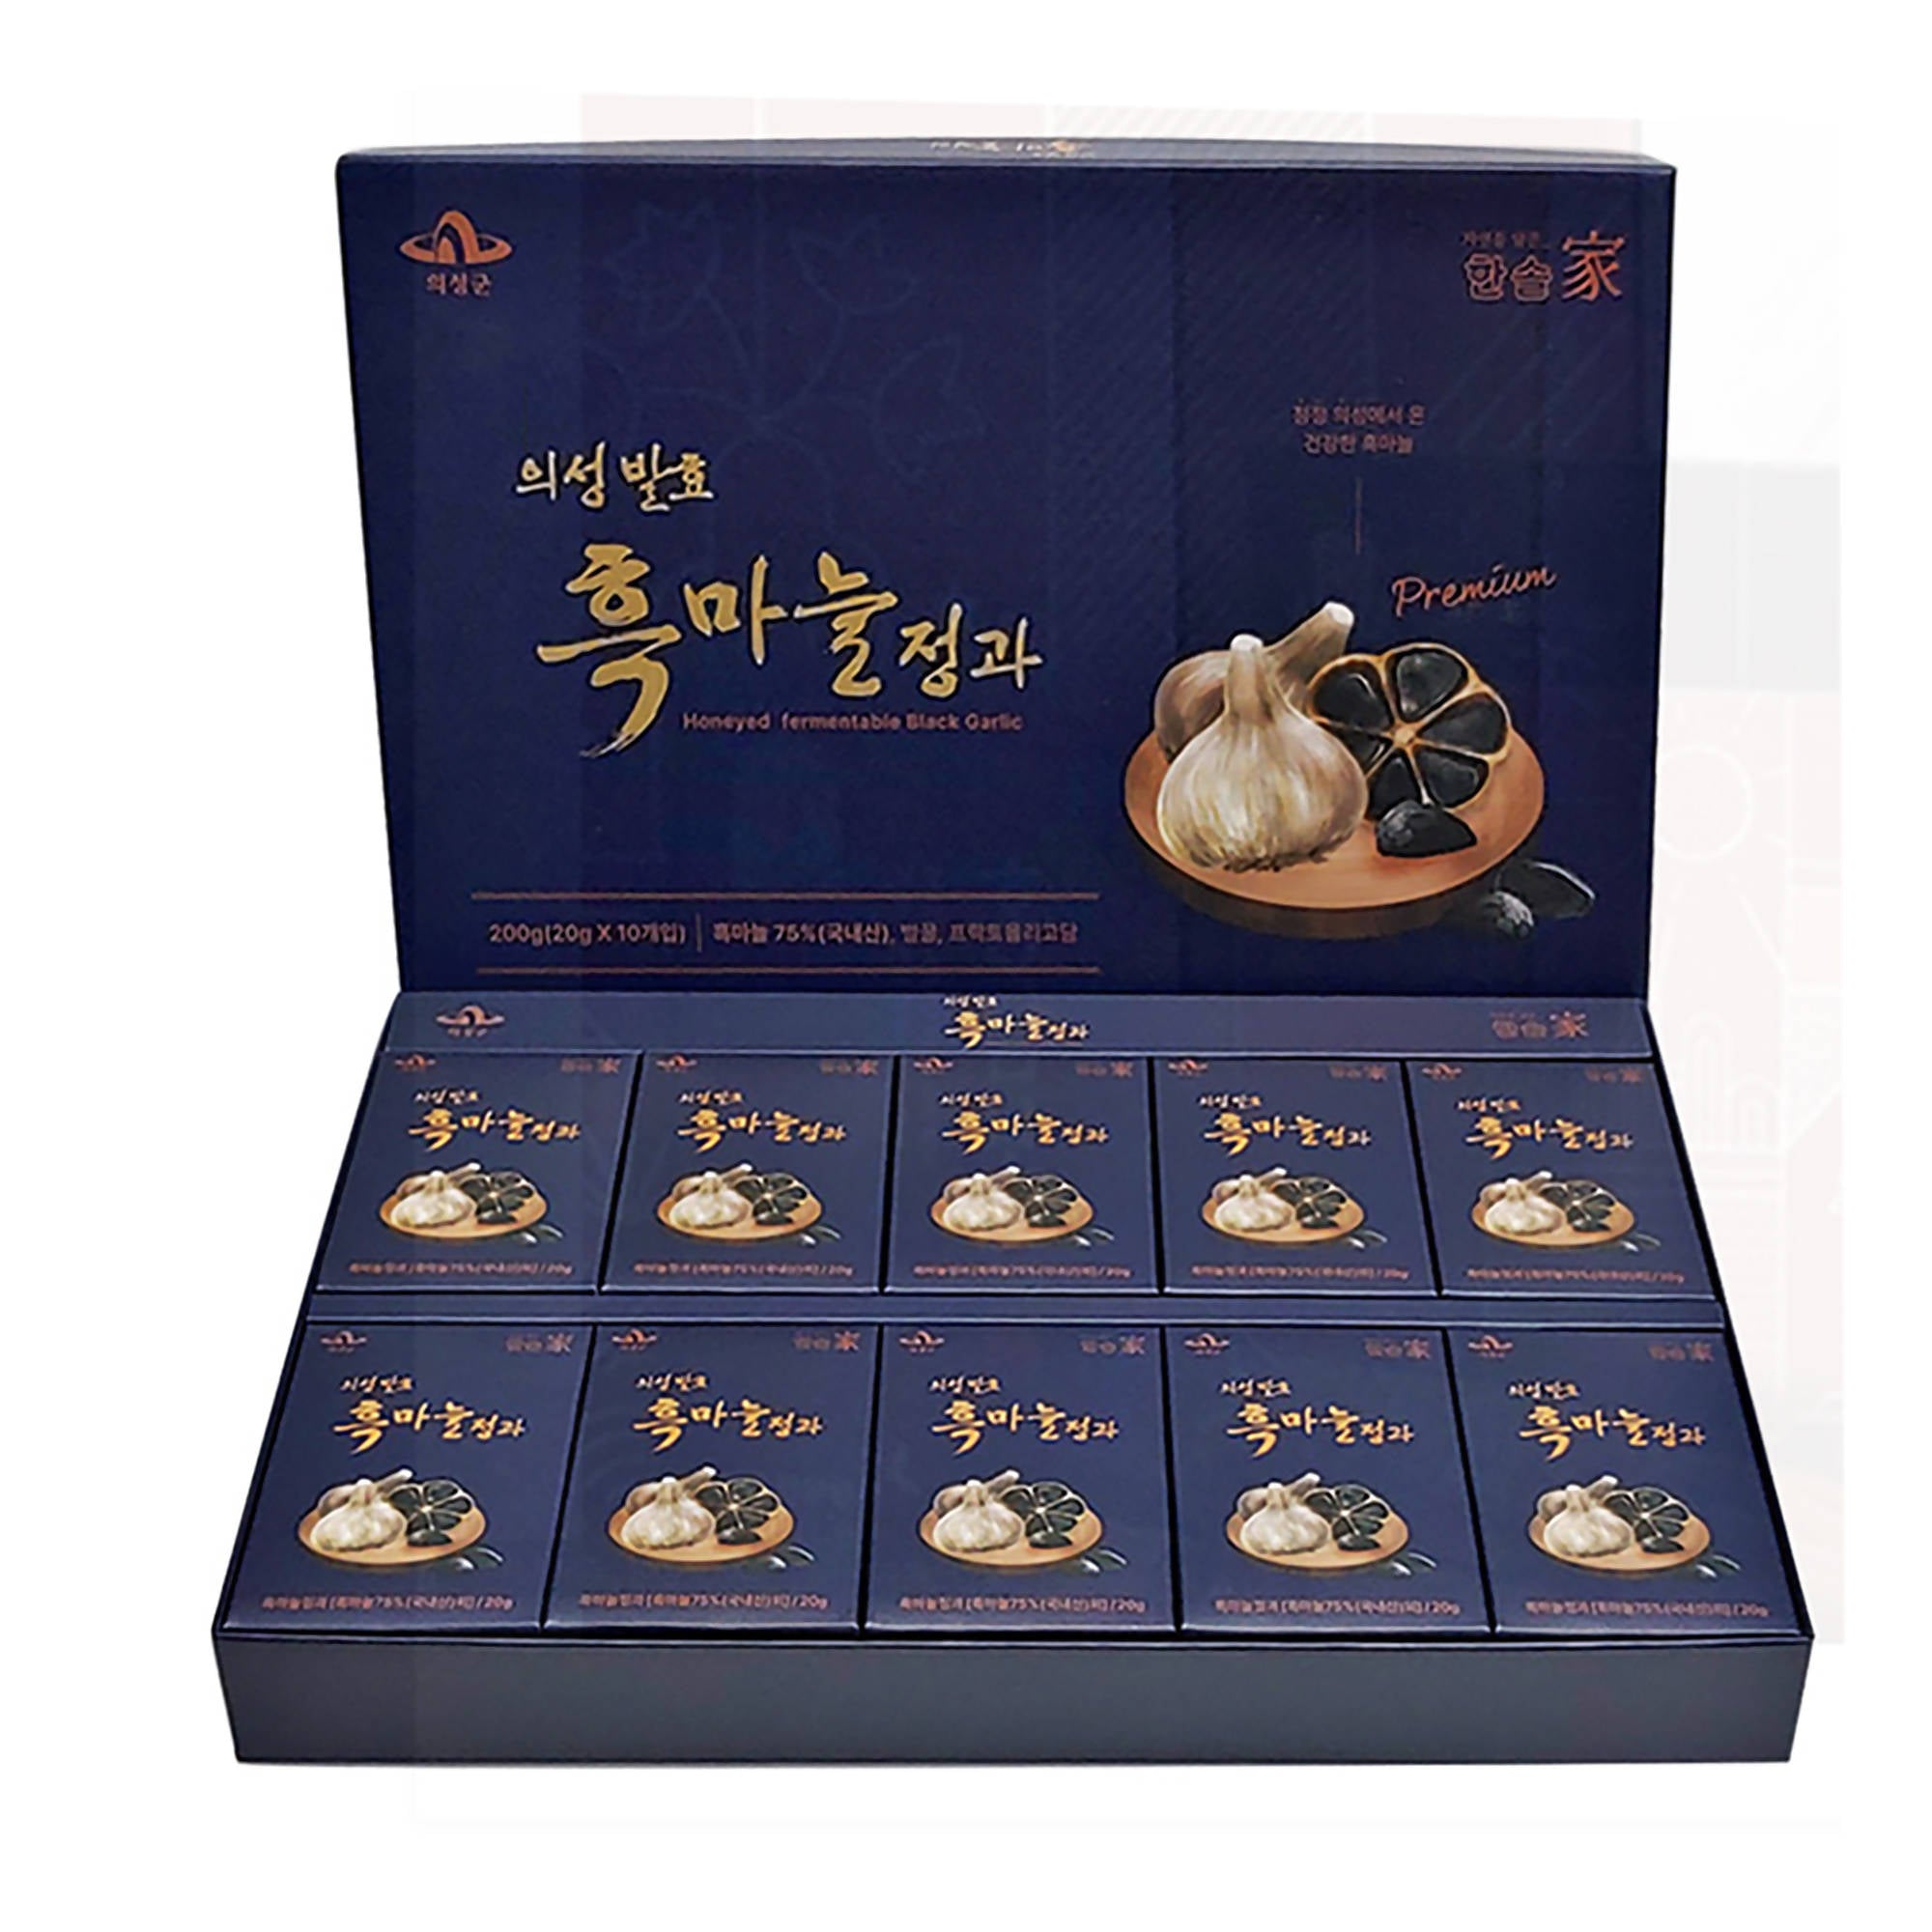 Black Garlic Jeonggwa, Fermented Black Garlic Honey with FREE Shopping Bag